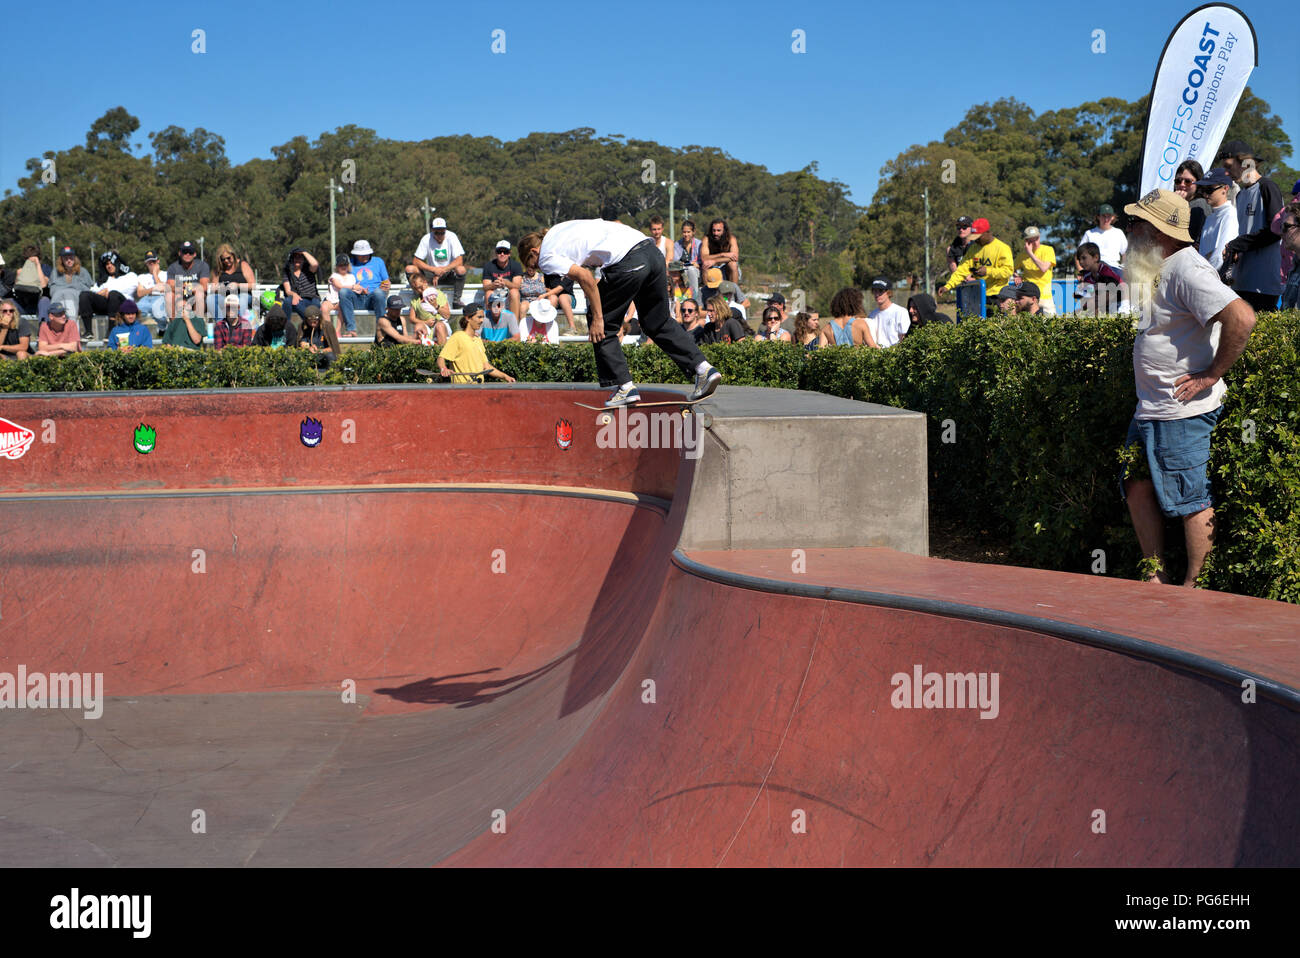 Skateboarding sport in Australia, Coffs Harbour on 18 August 2018. Boy skateboarder showing his skills while spectators watch. Stock Photo